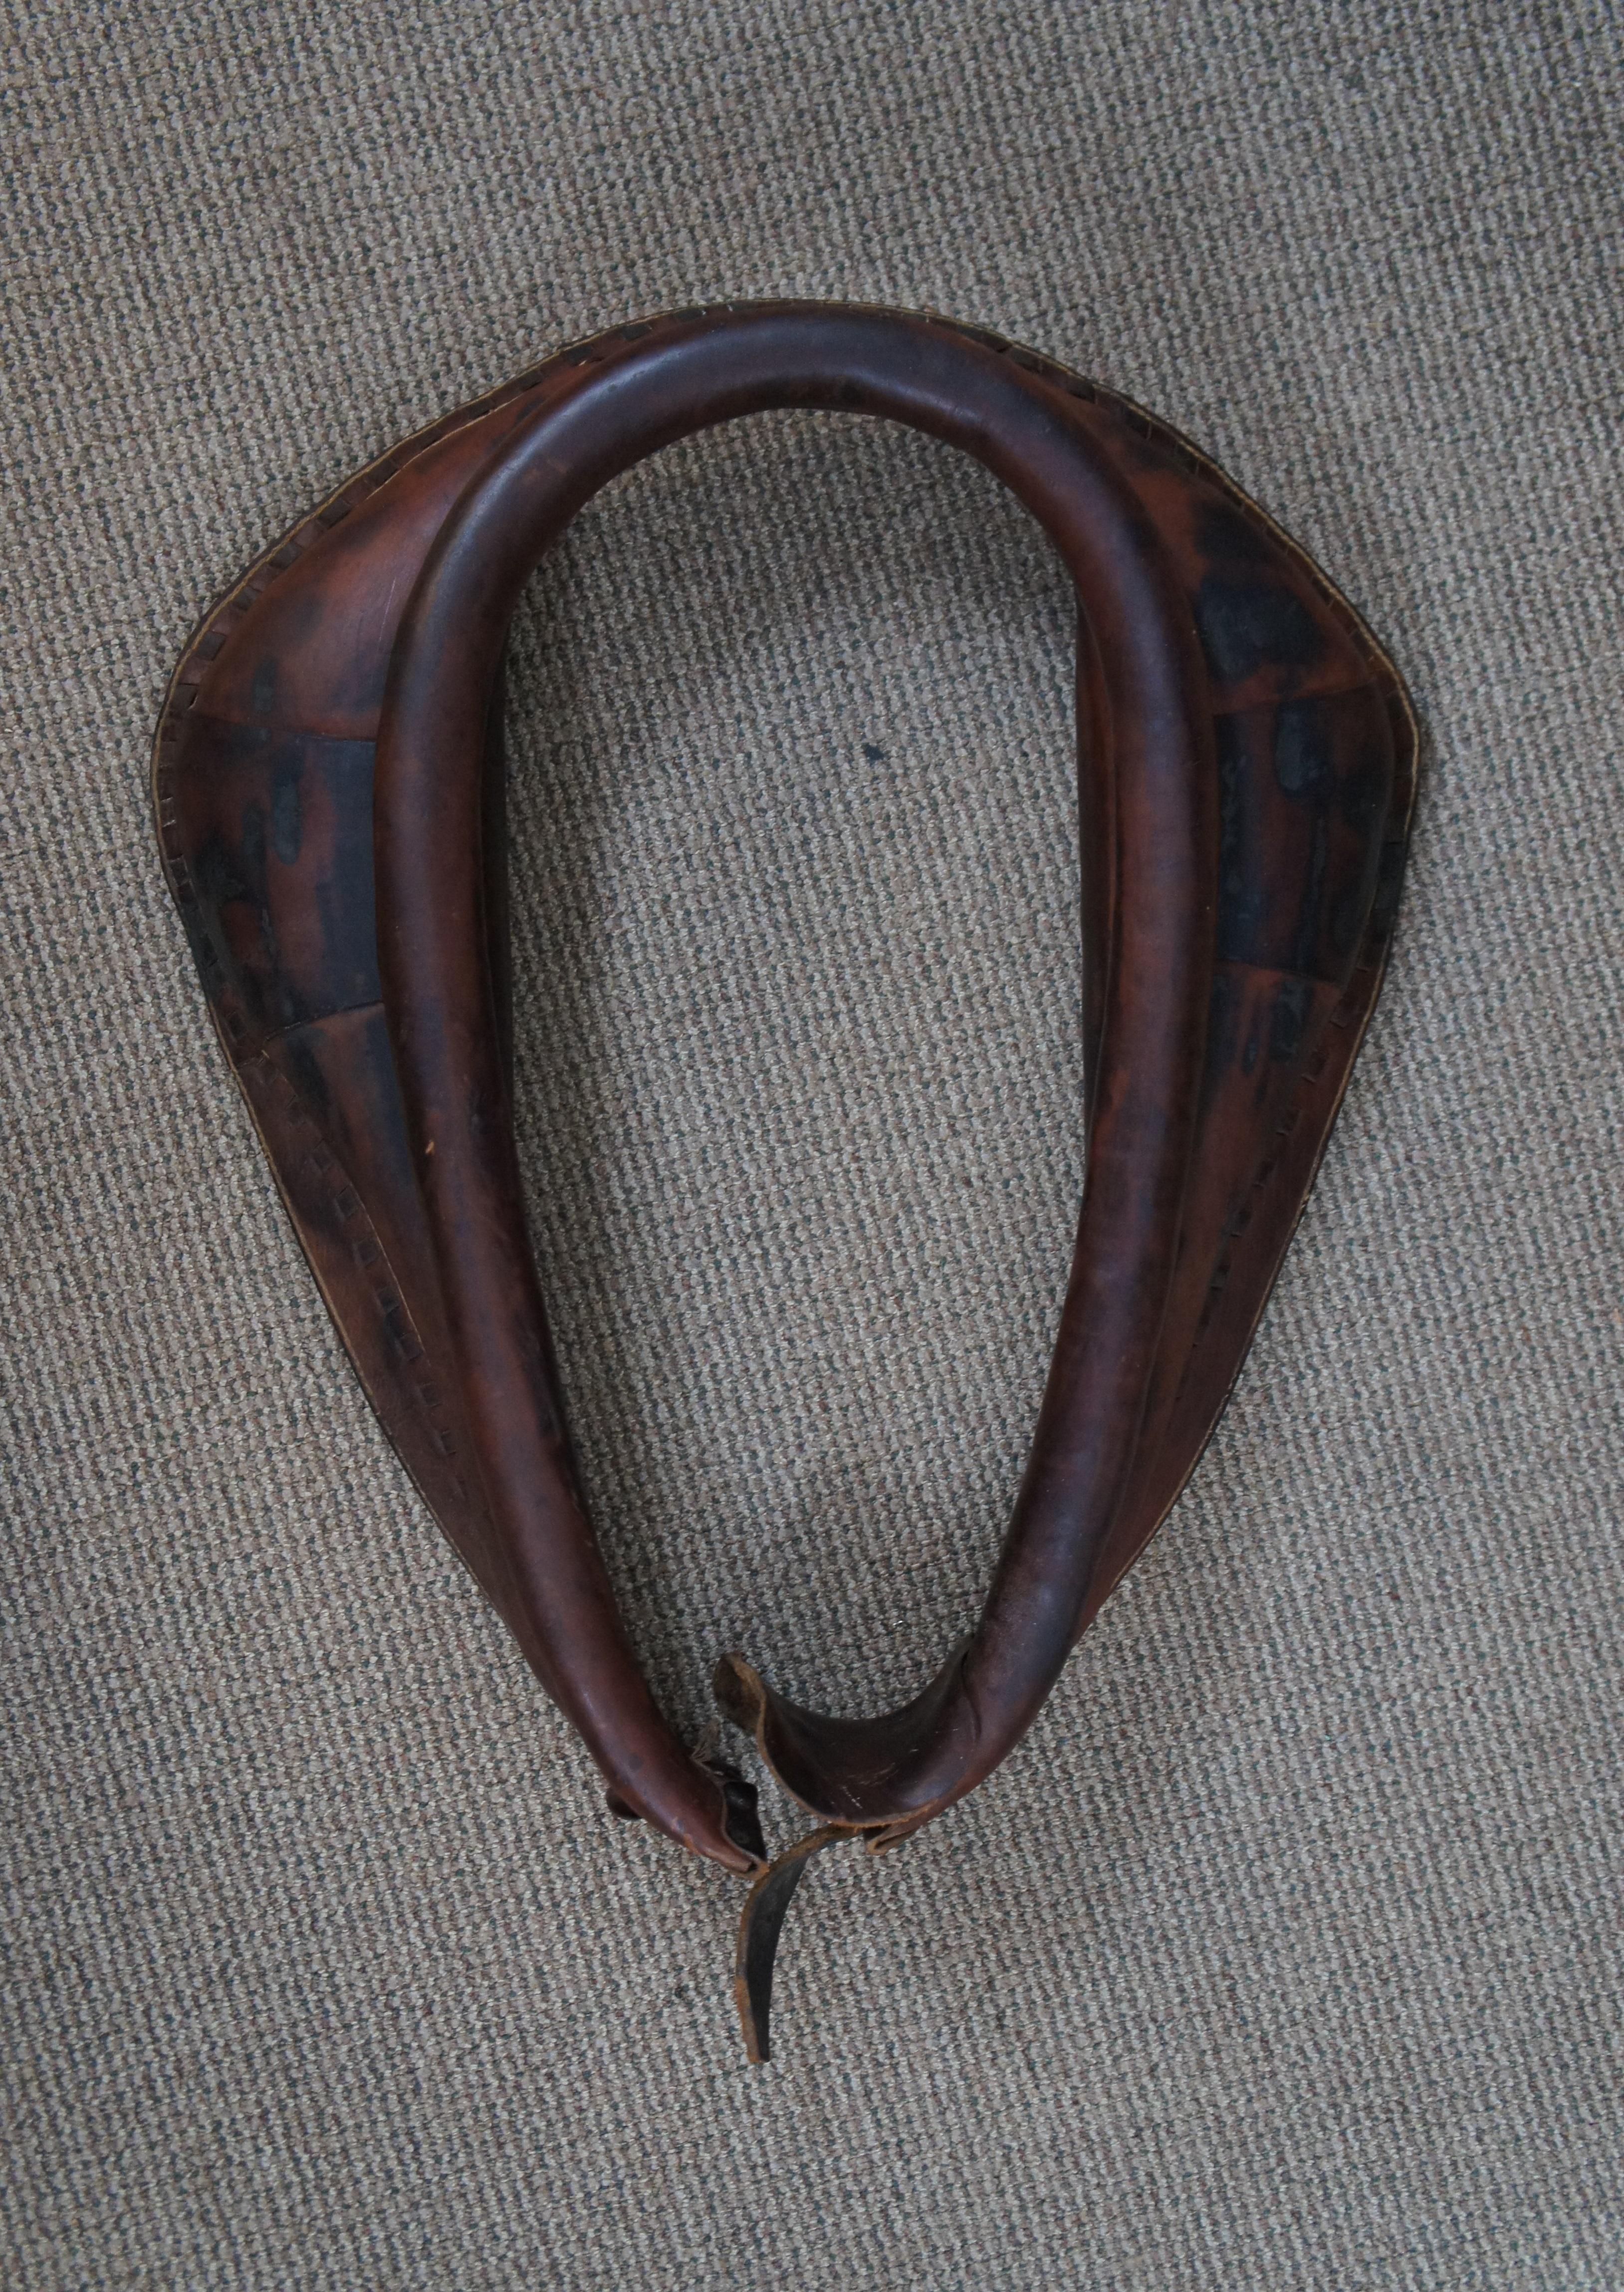 Antique Western Equestrian Horse Yoke Collar Hames Snaffle Bit Tack Plow Halter  For Sale 1